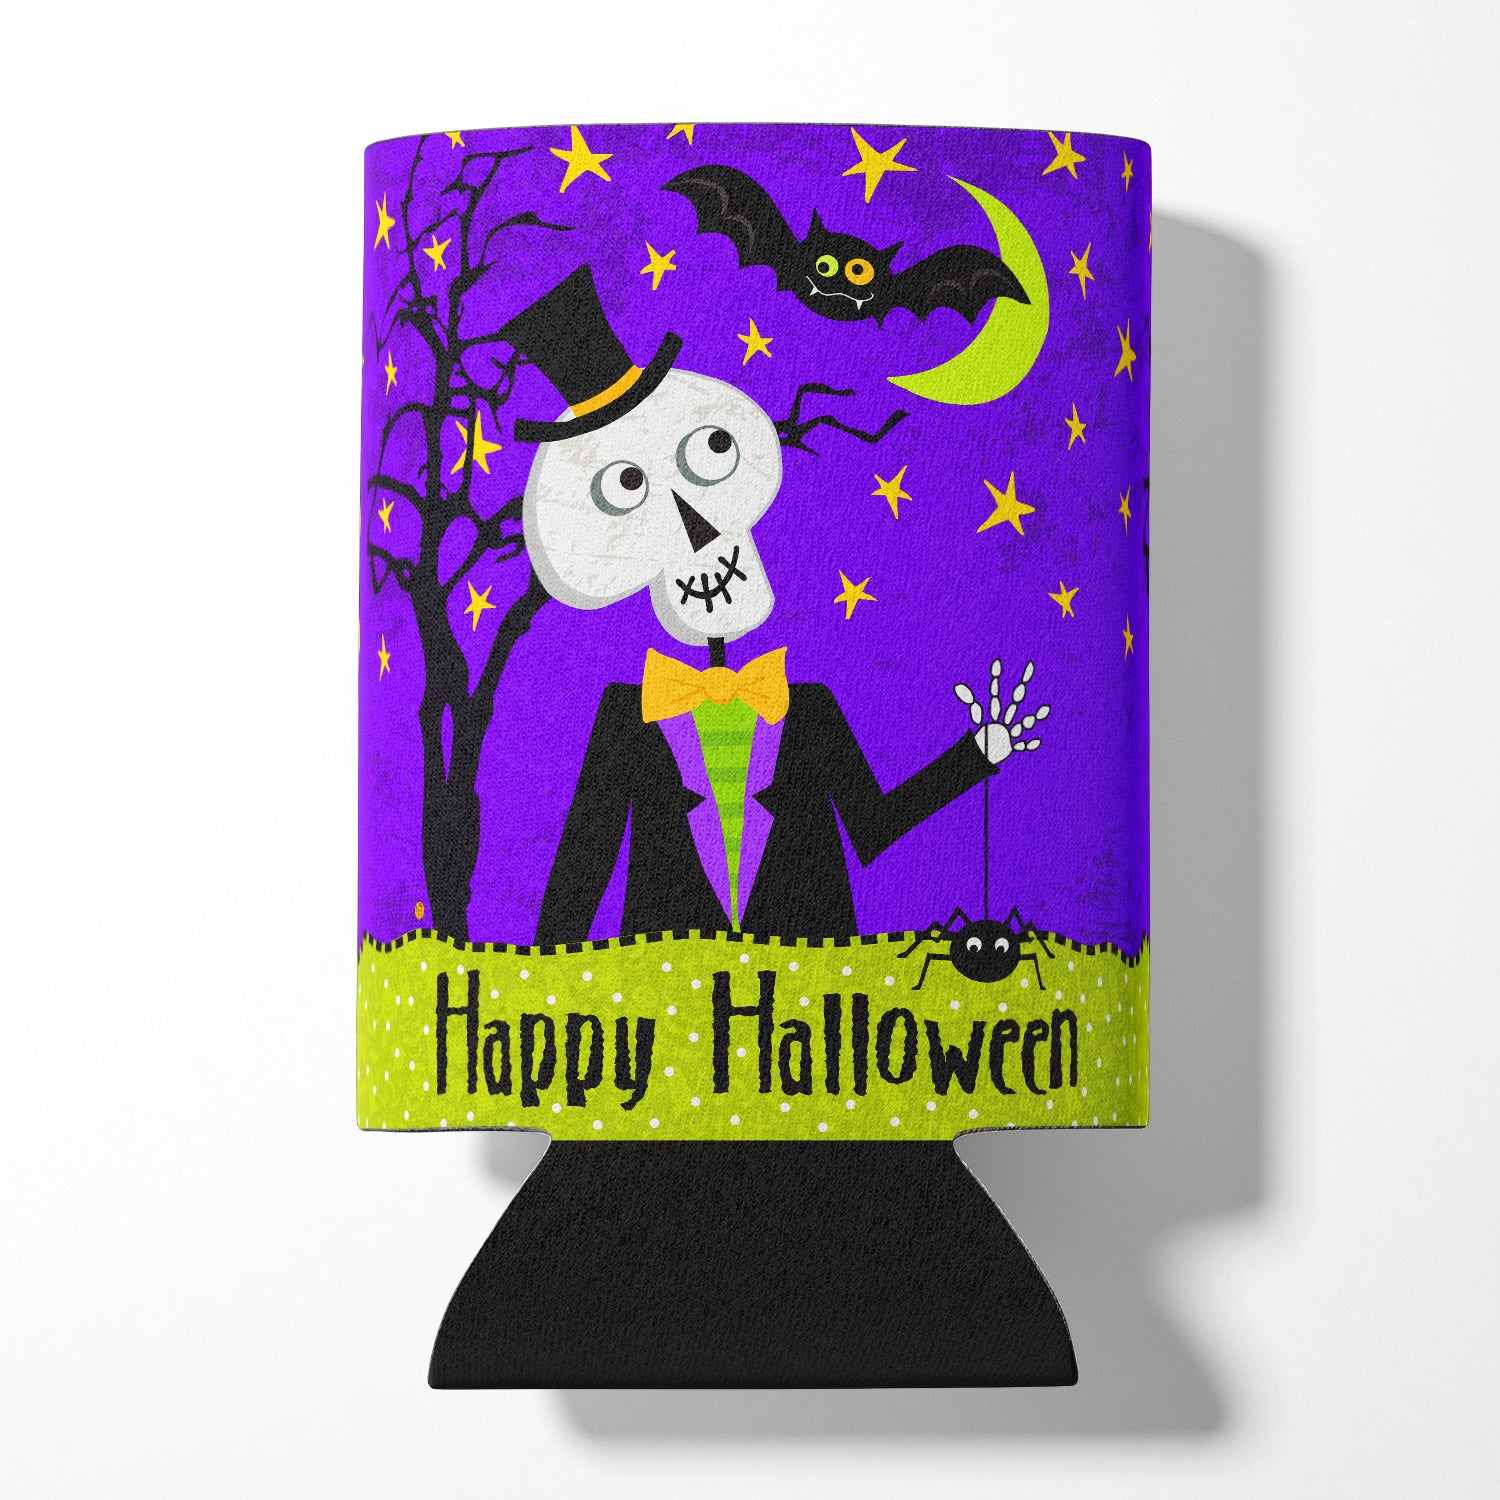 Happy Halloween Skeleton Can or Bottle Hugger VHA3014CC